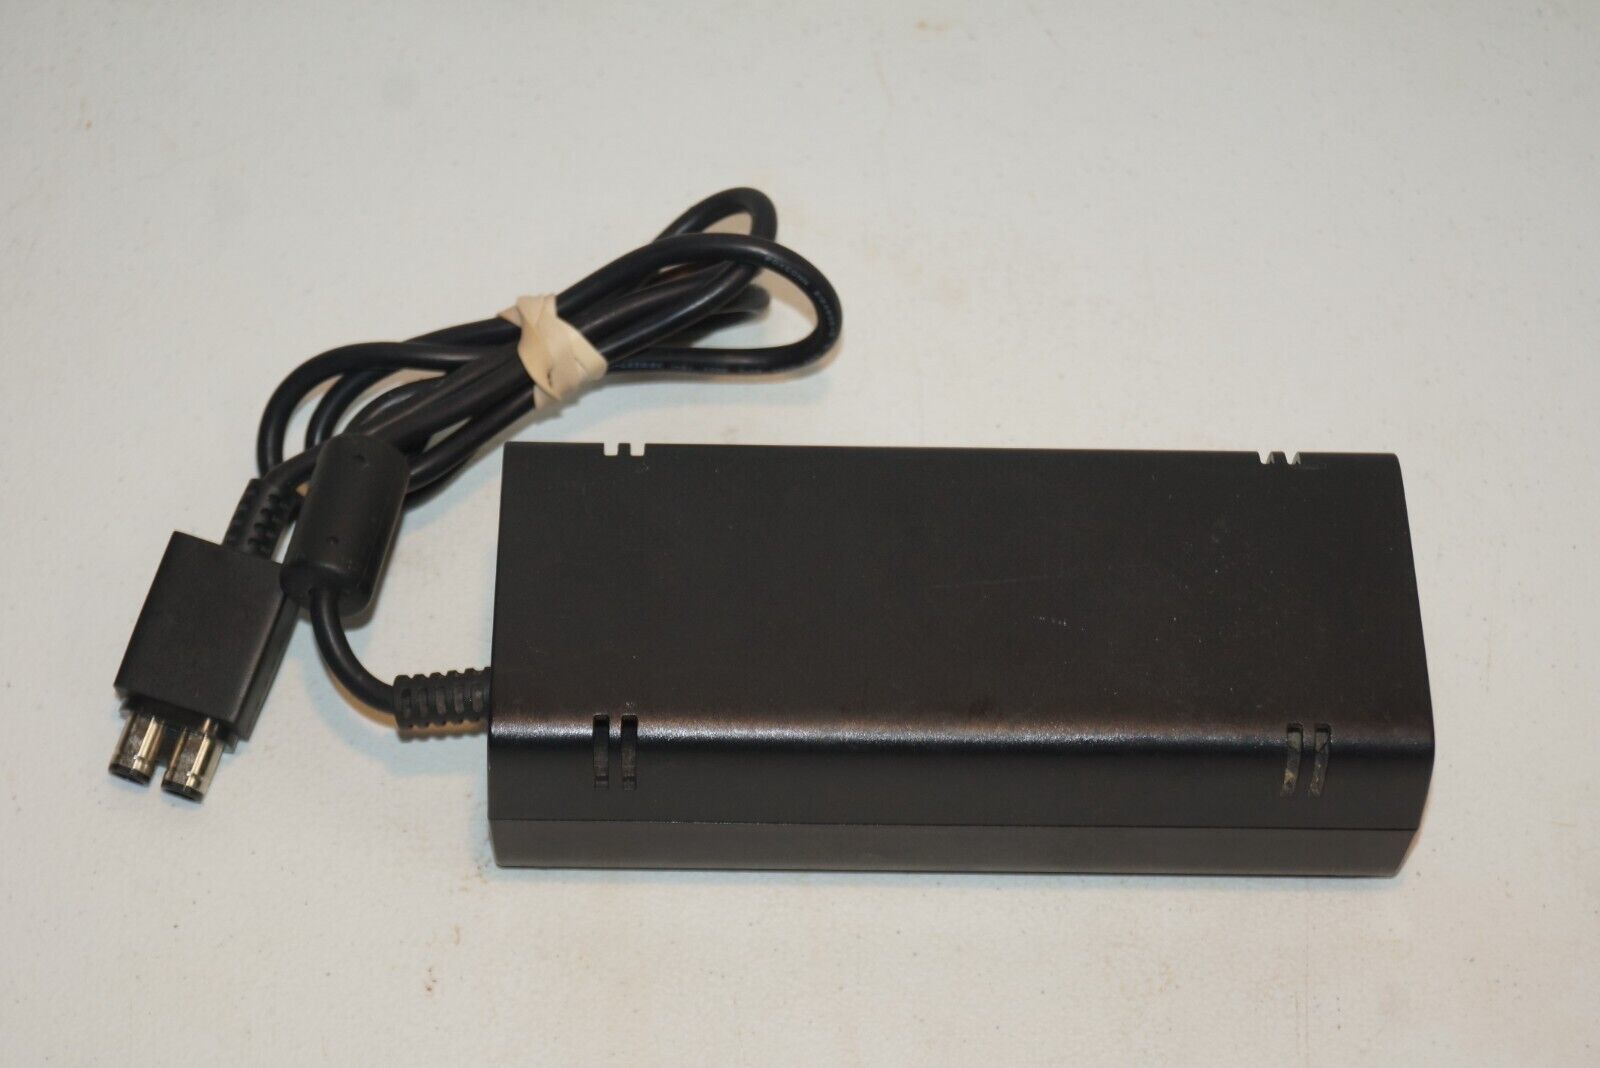 Genuine Microsoft Xbox 360 Power Supply AC Adapter Model PB-2131-02MX Tested - $19.79